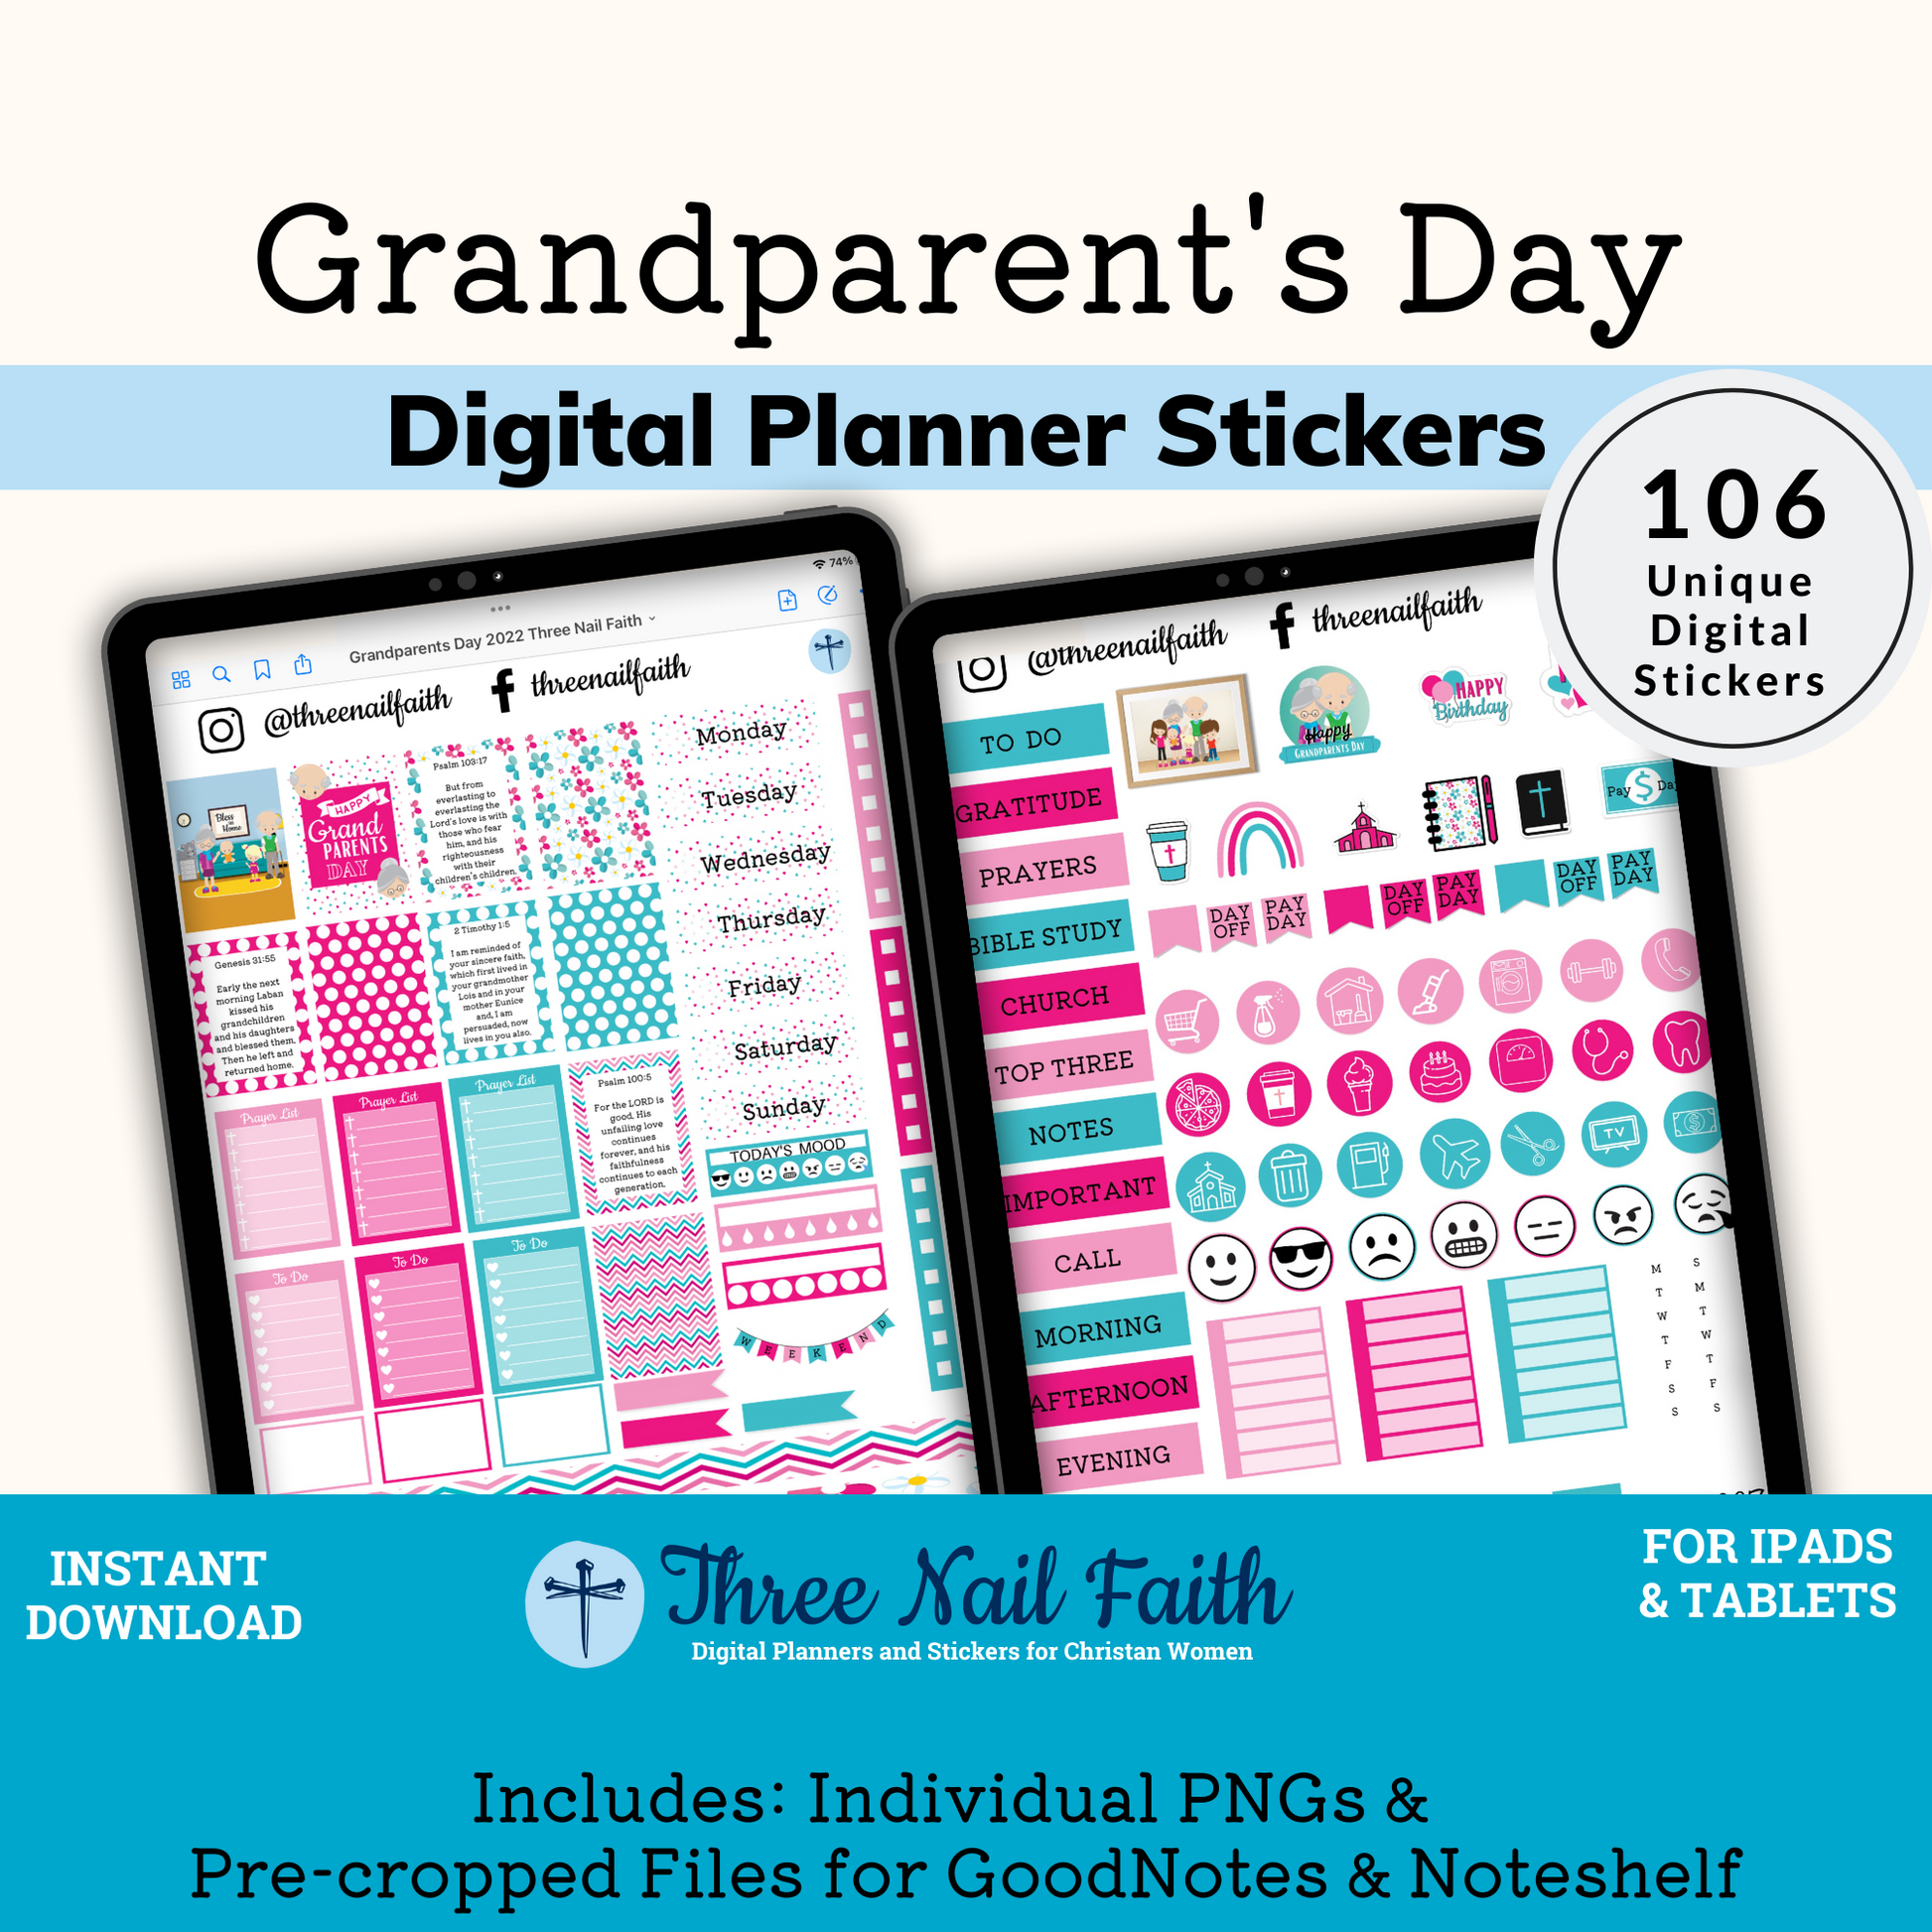 Grandparents day digital sticker kit with 106 Digital stickers